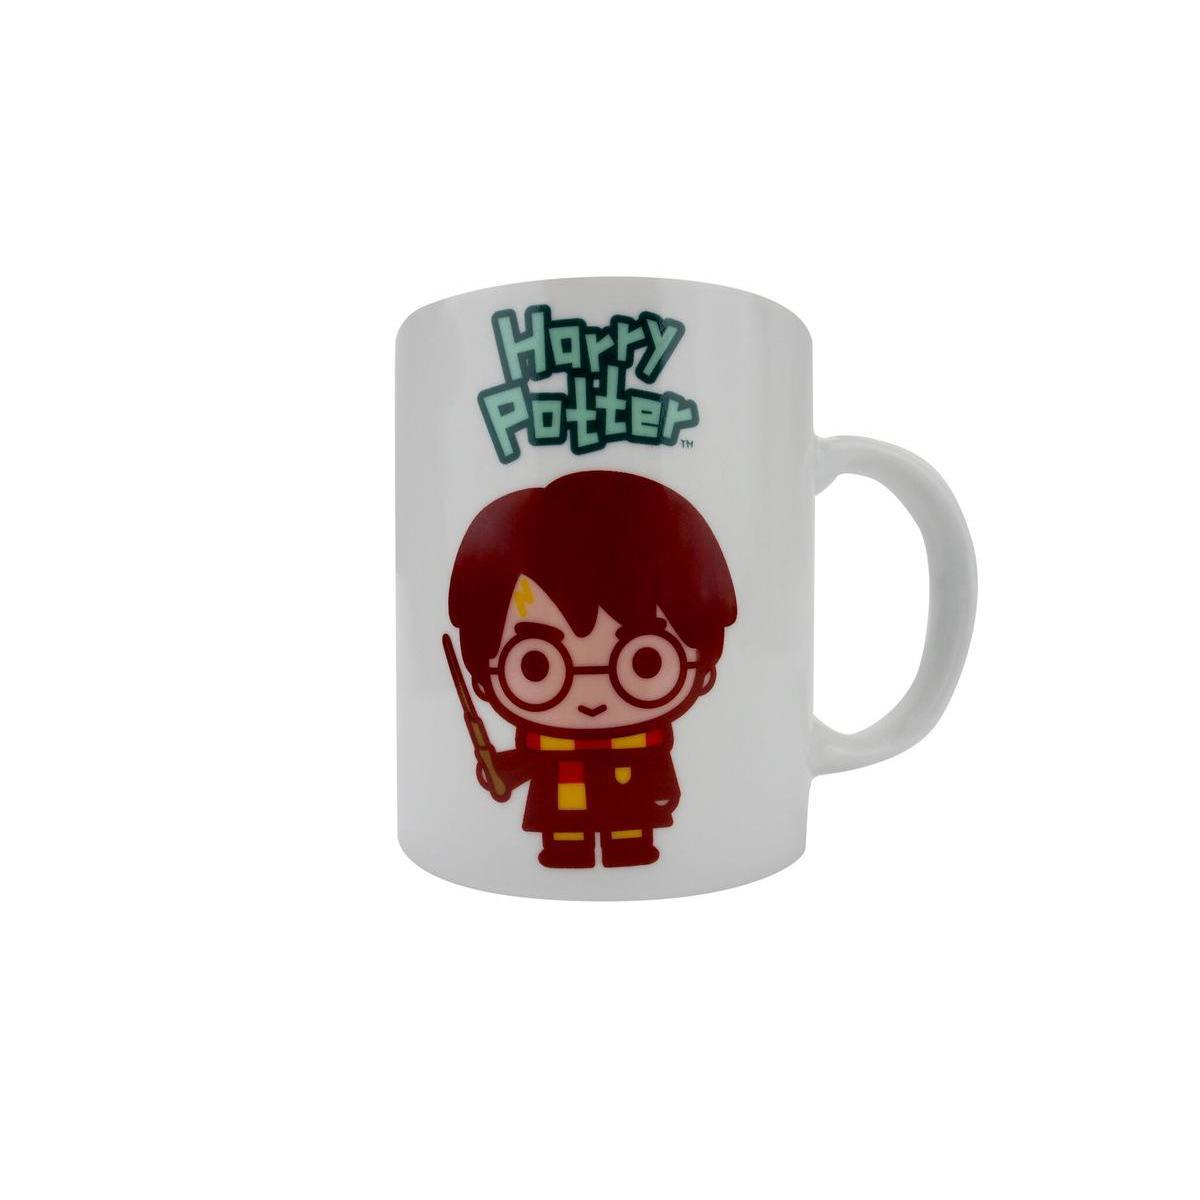 Mug Harry Potter - 8 x 8 x 12 cm - Multicolore - HARRY POTTER